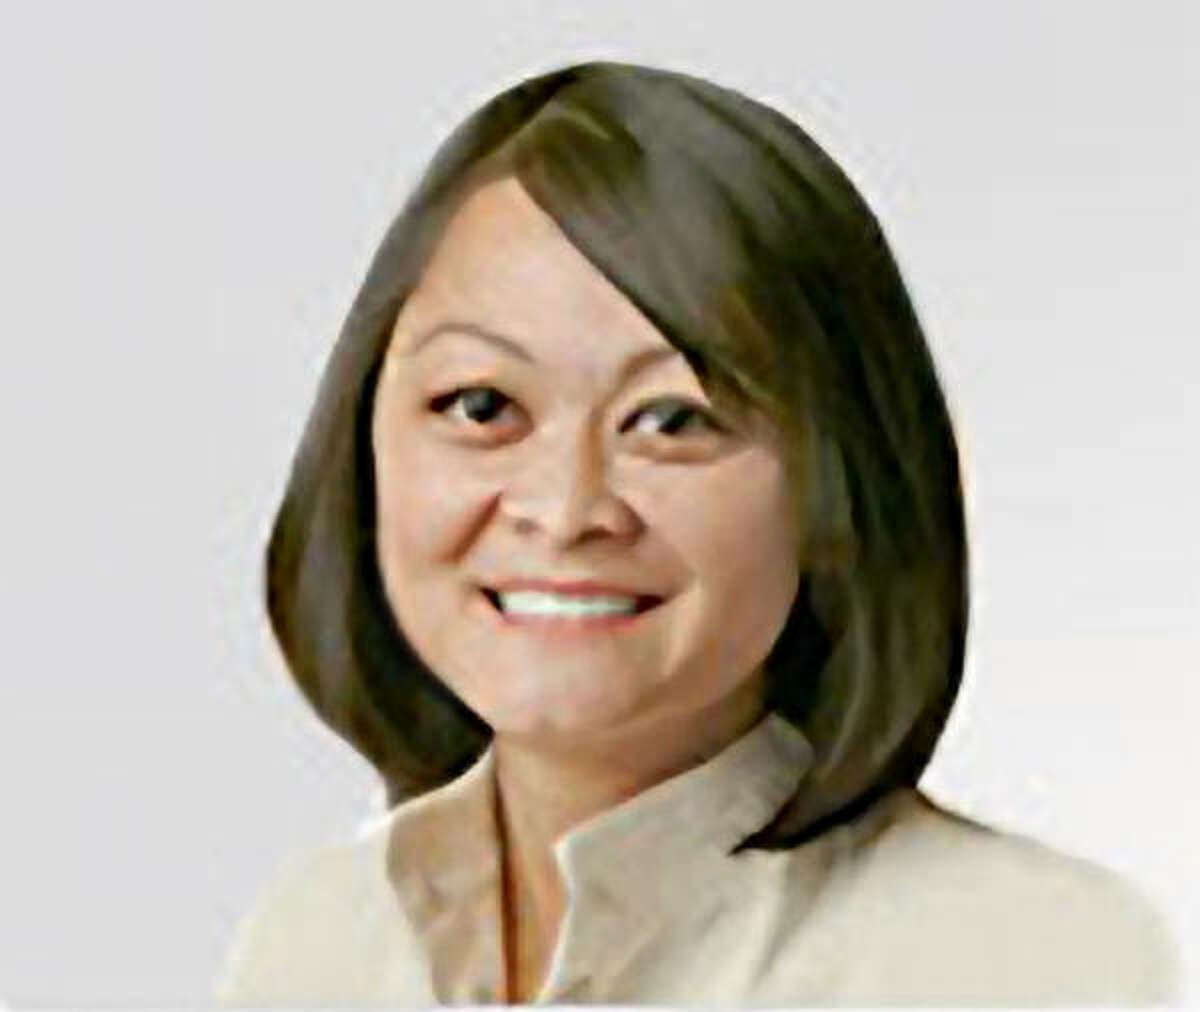 San Francisco Supervisor Carmen Chu is a member of the Health Service System Board.